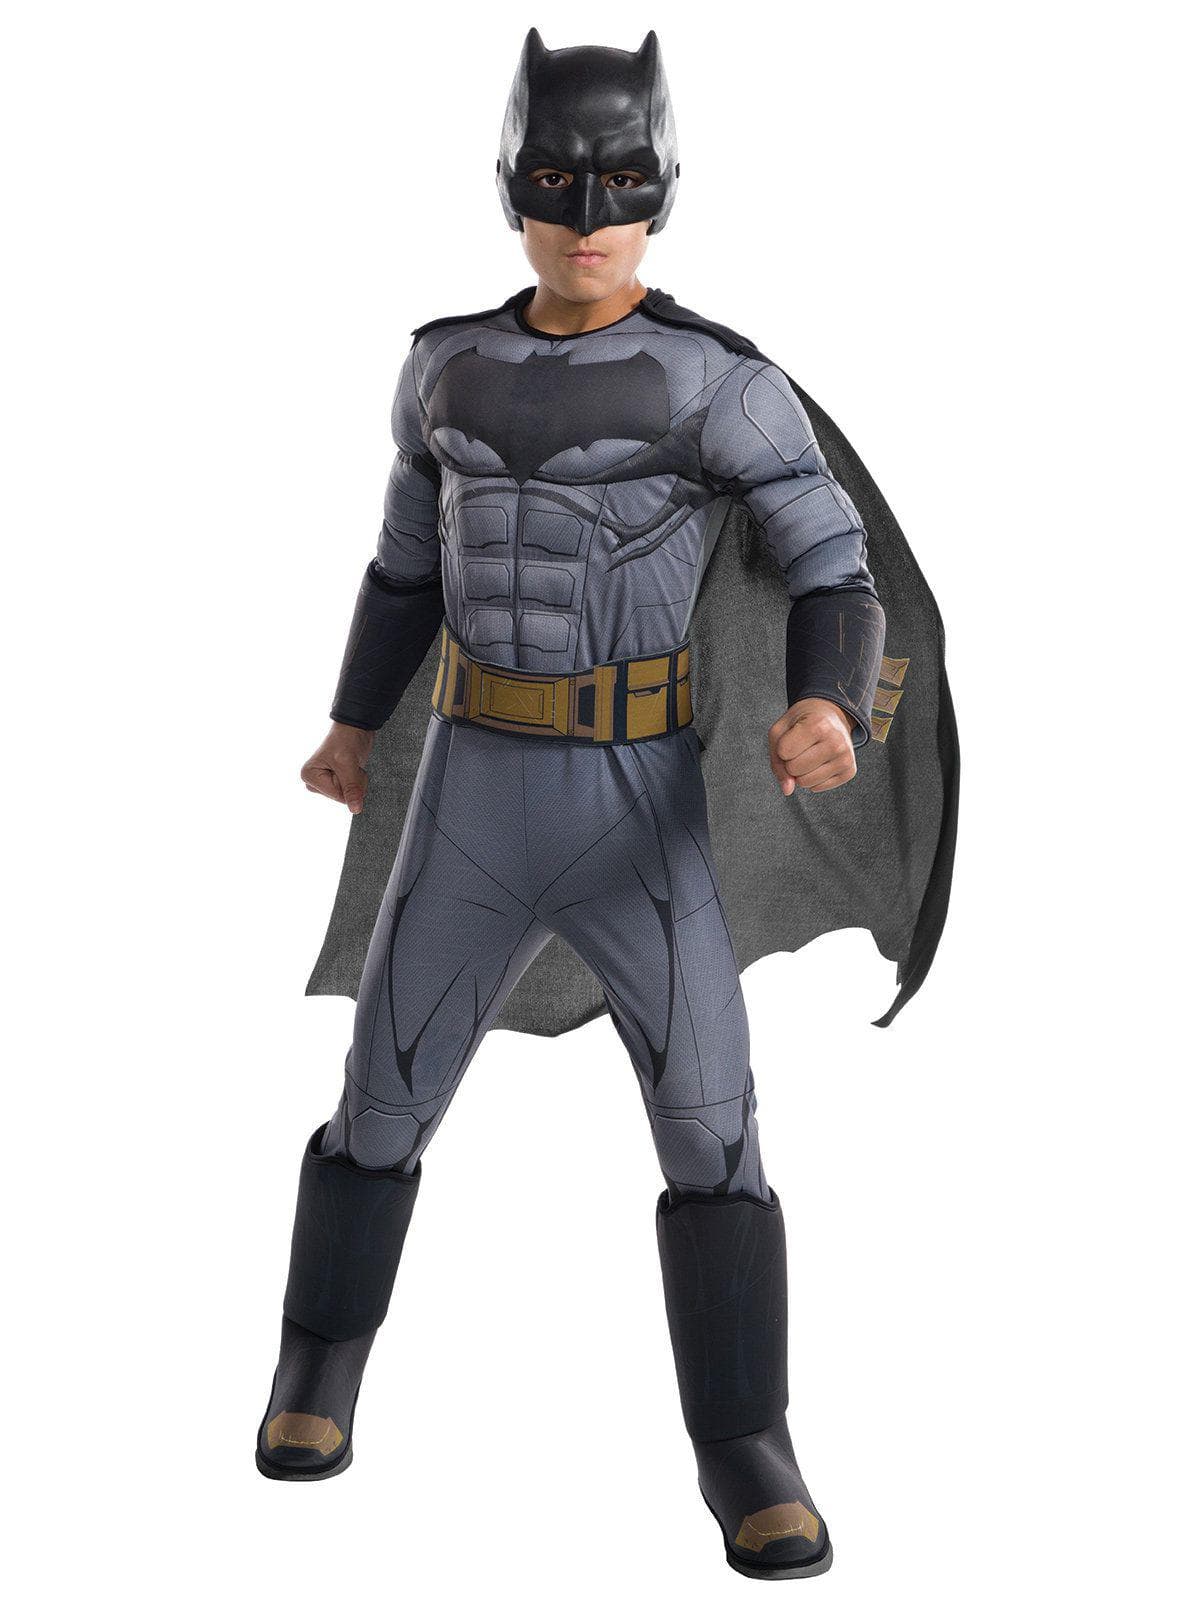 Kid's Justice League Batman Deluxe Costume - costumes.com